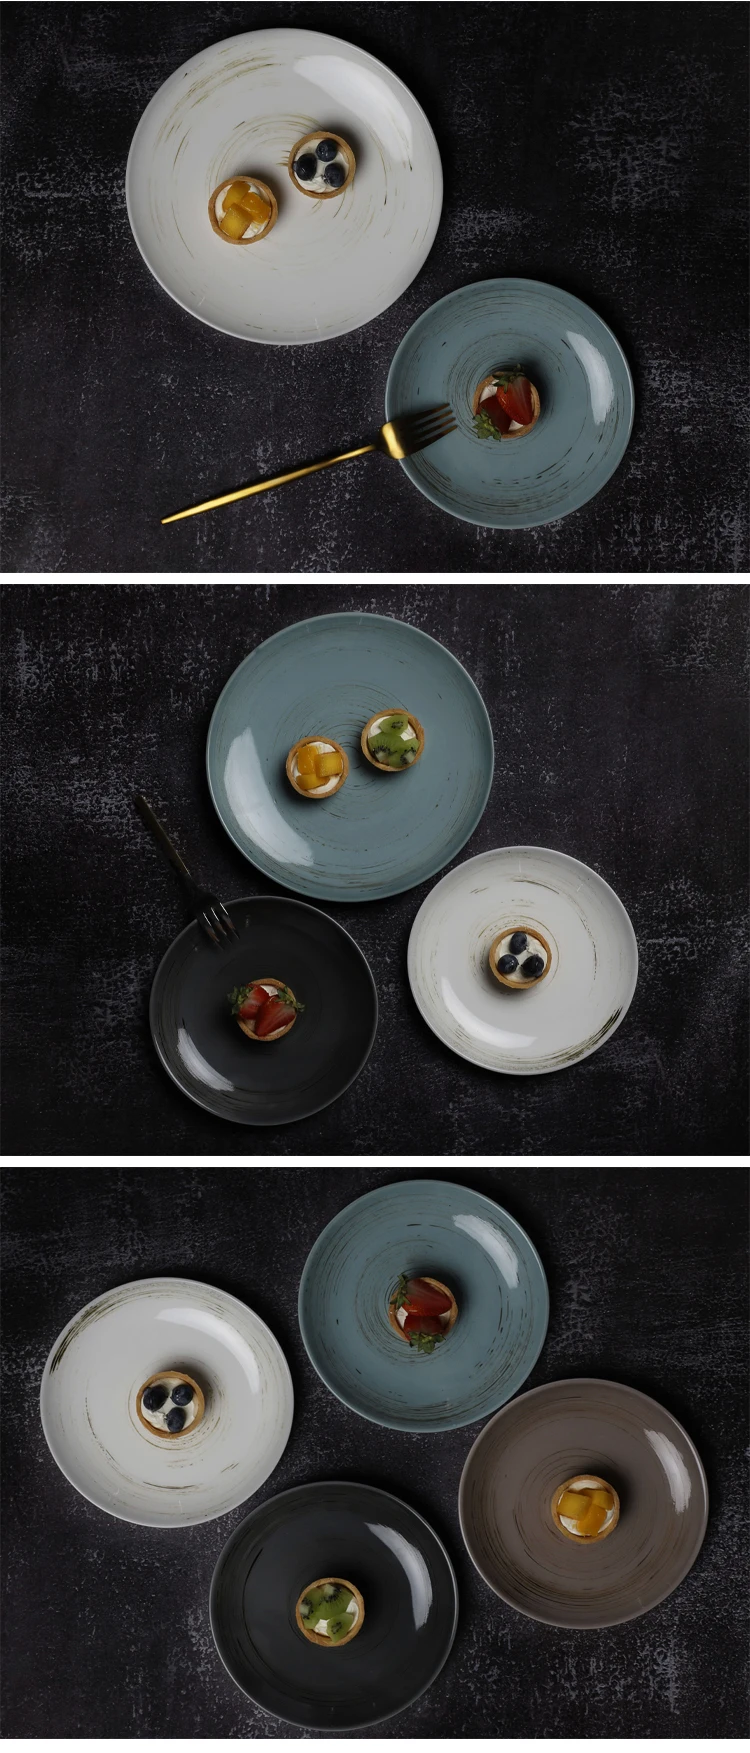 Hotel Ceramic Dish, Luxury Cafe Vajilla De Porcelana Standard Dinner Plate Size, Restaurant Plates Ceramic Dinner@